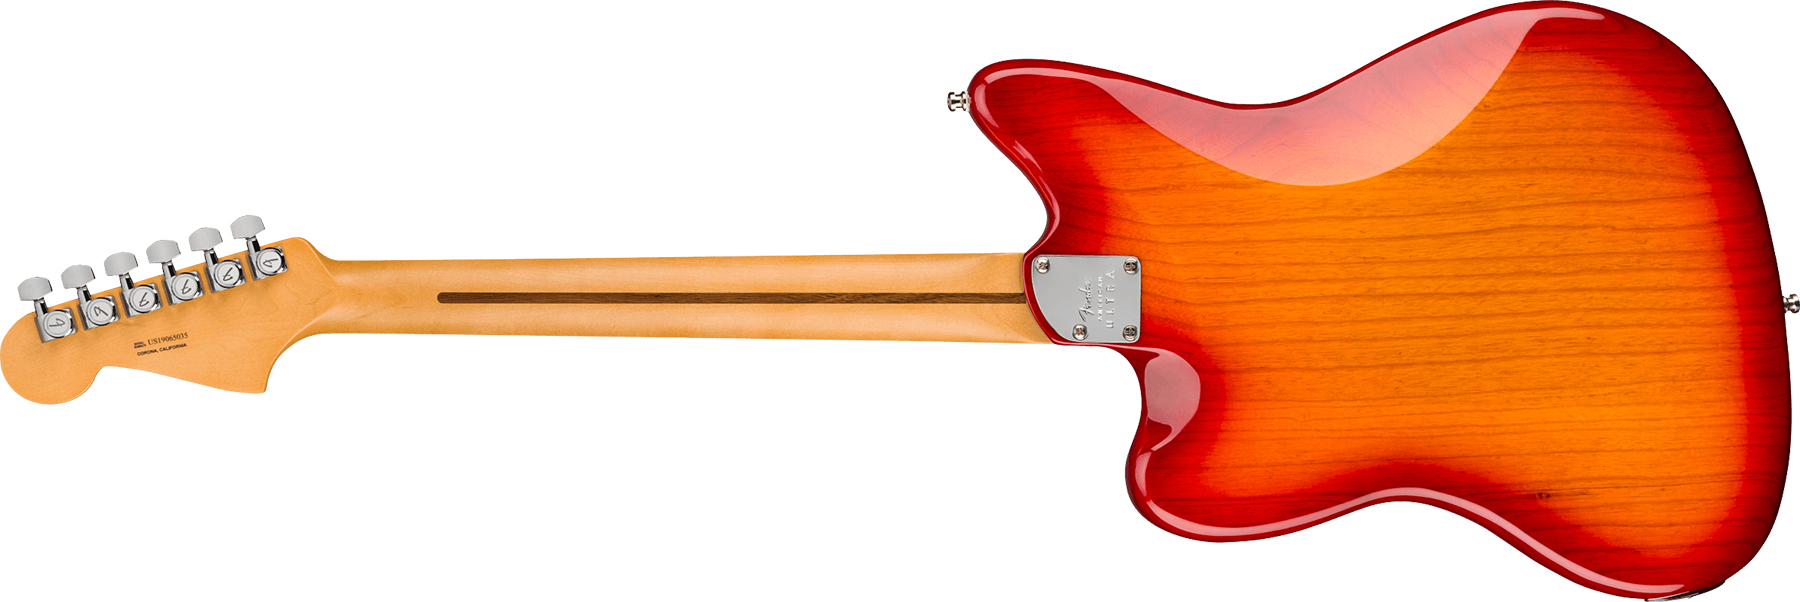 Fender Jazzmaster American Ultra 2019 Usa Mn - Plasma Red Burst - Guitarra electrica retro rock - Variation 1